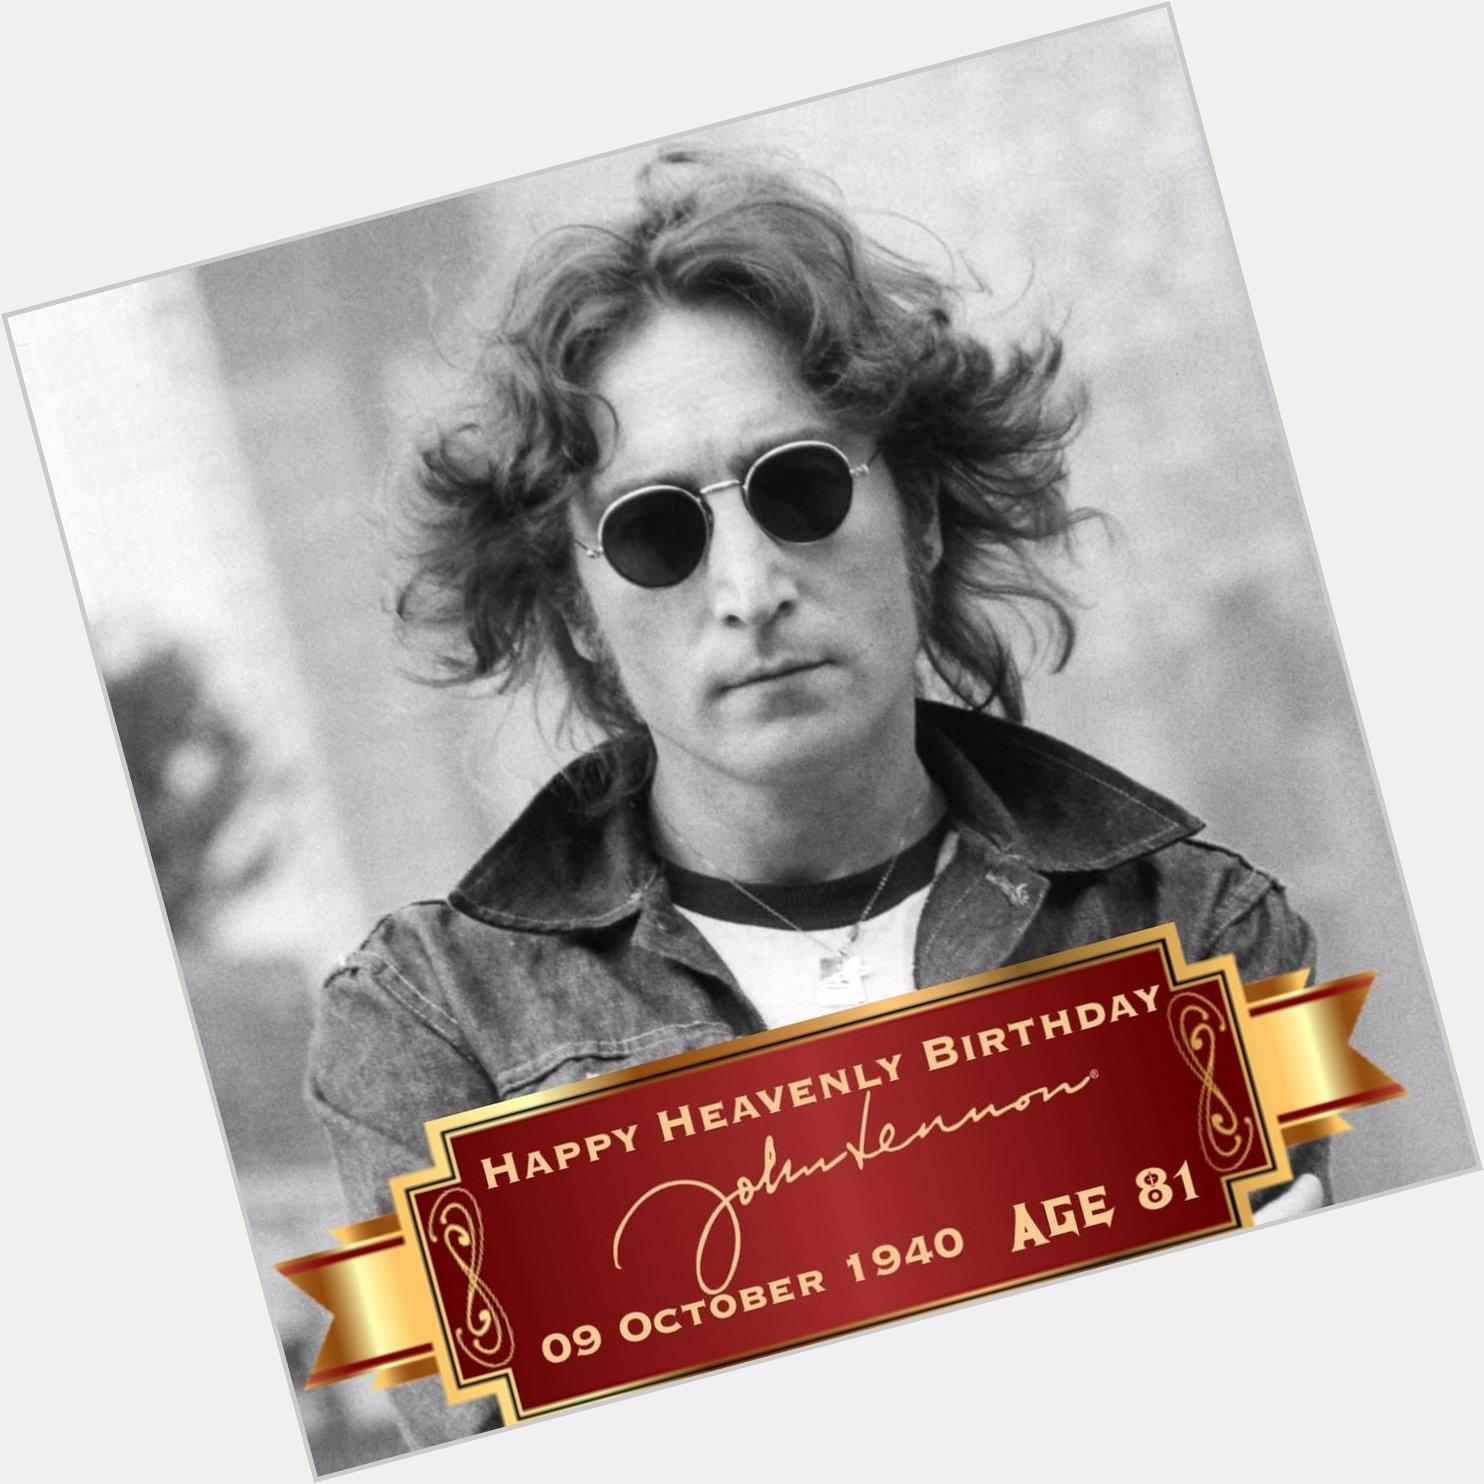 Happy Heavenly Birthday to sir John Lennon (     